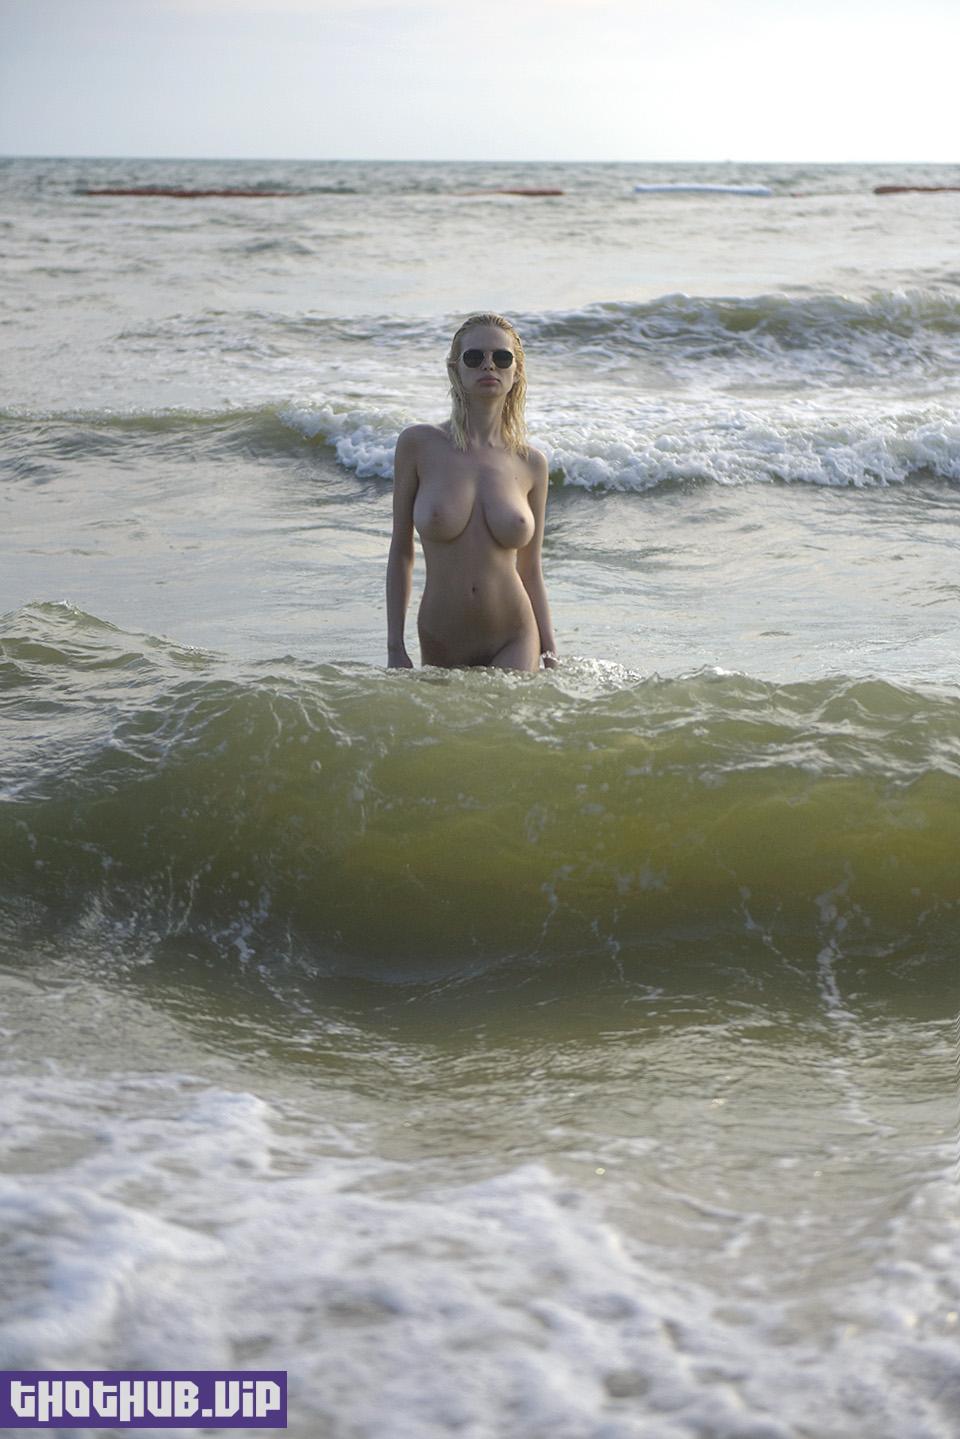 Russian model Julia Logacheva nude photos leaked